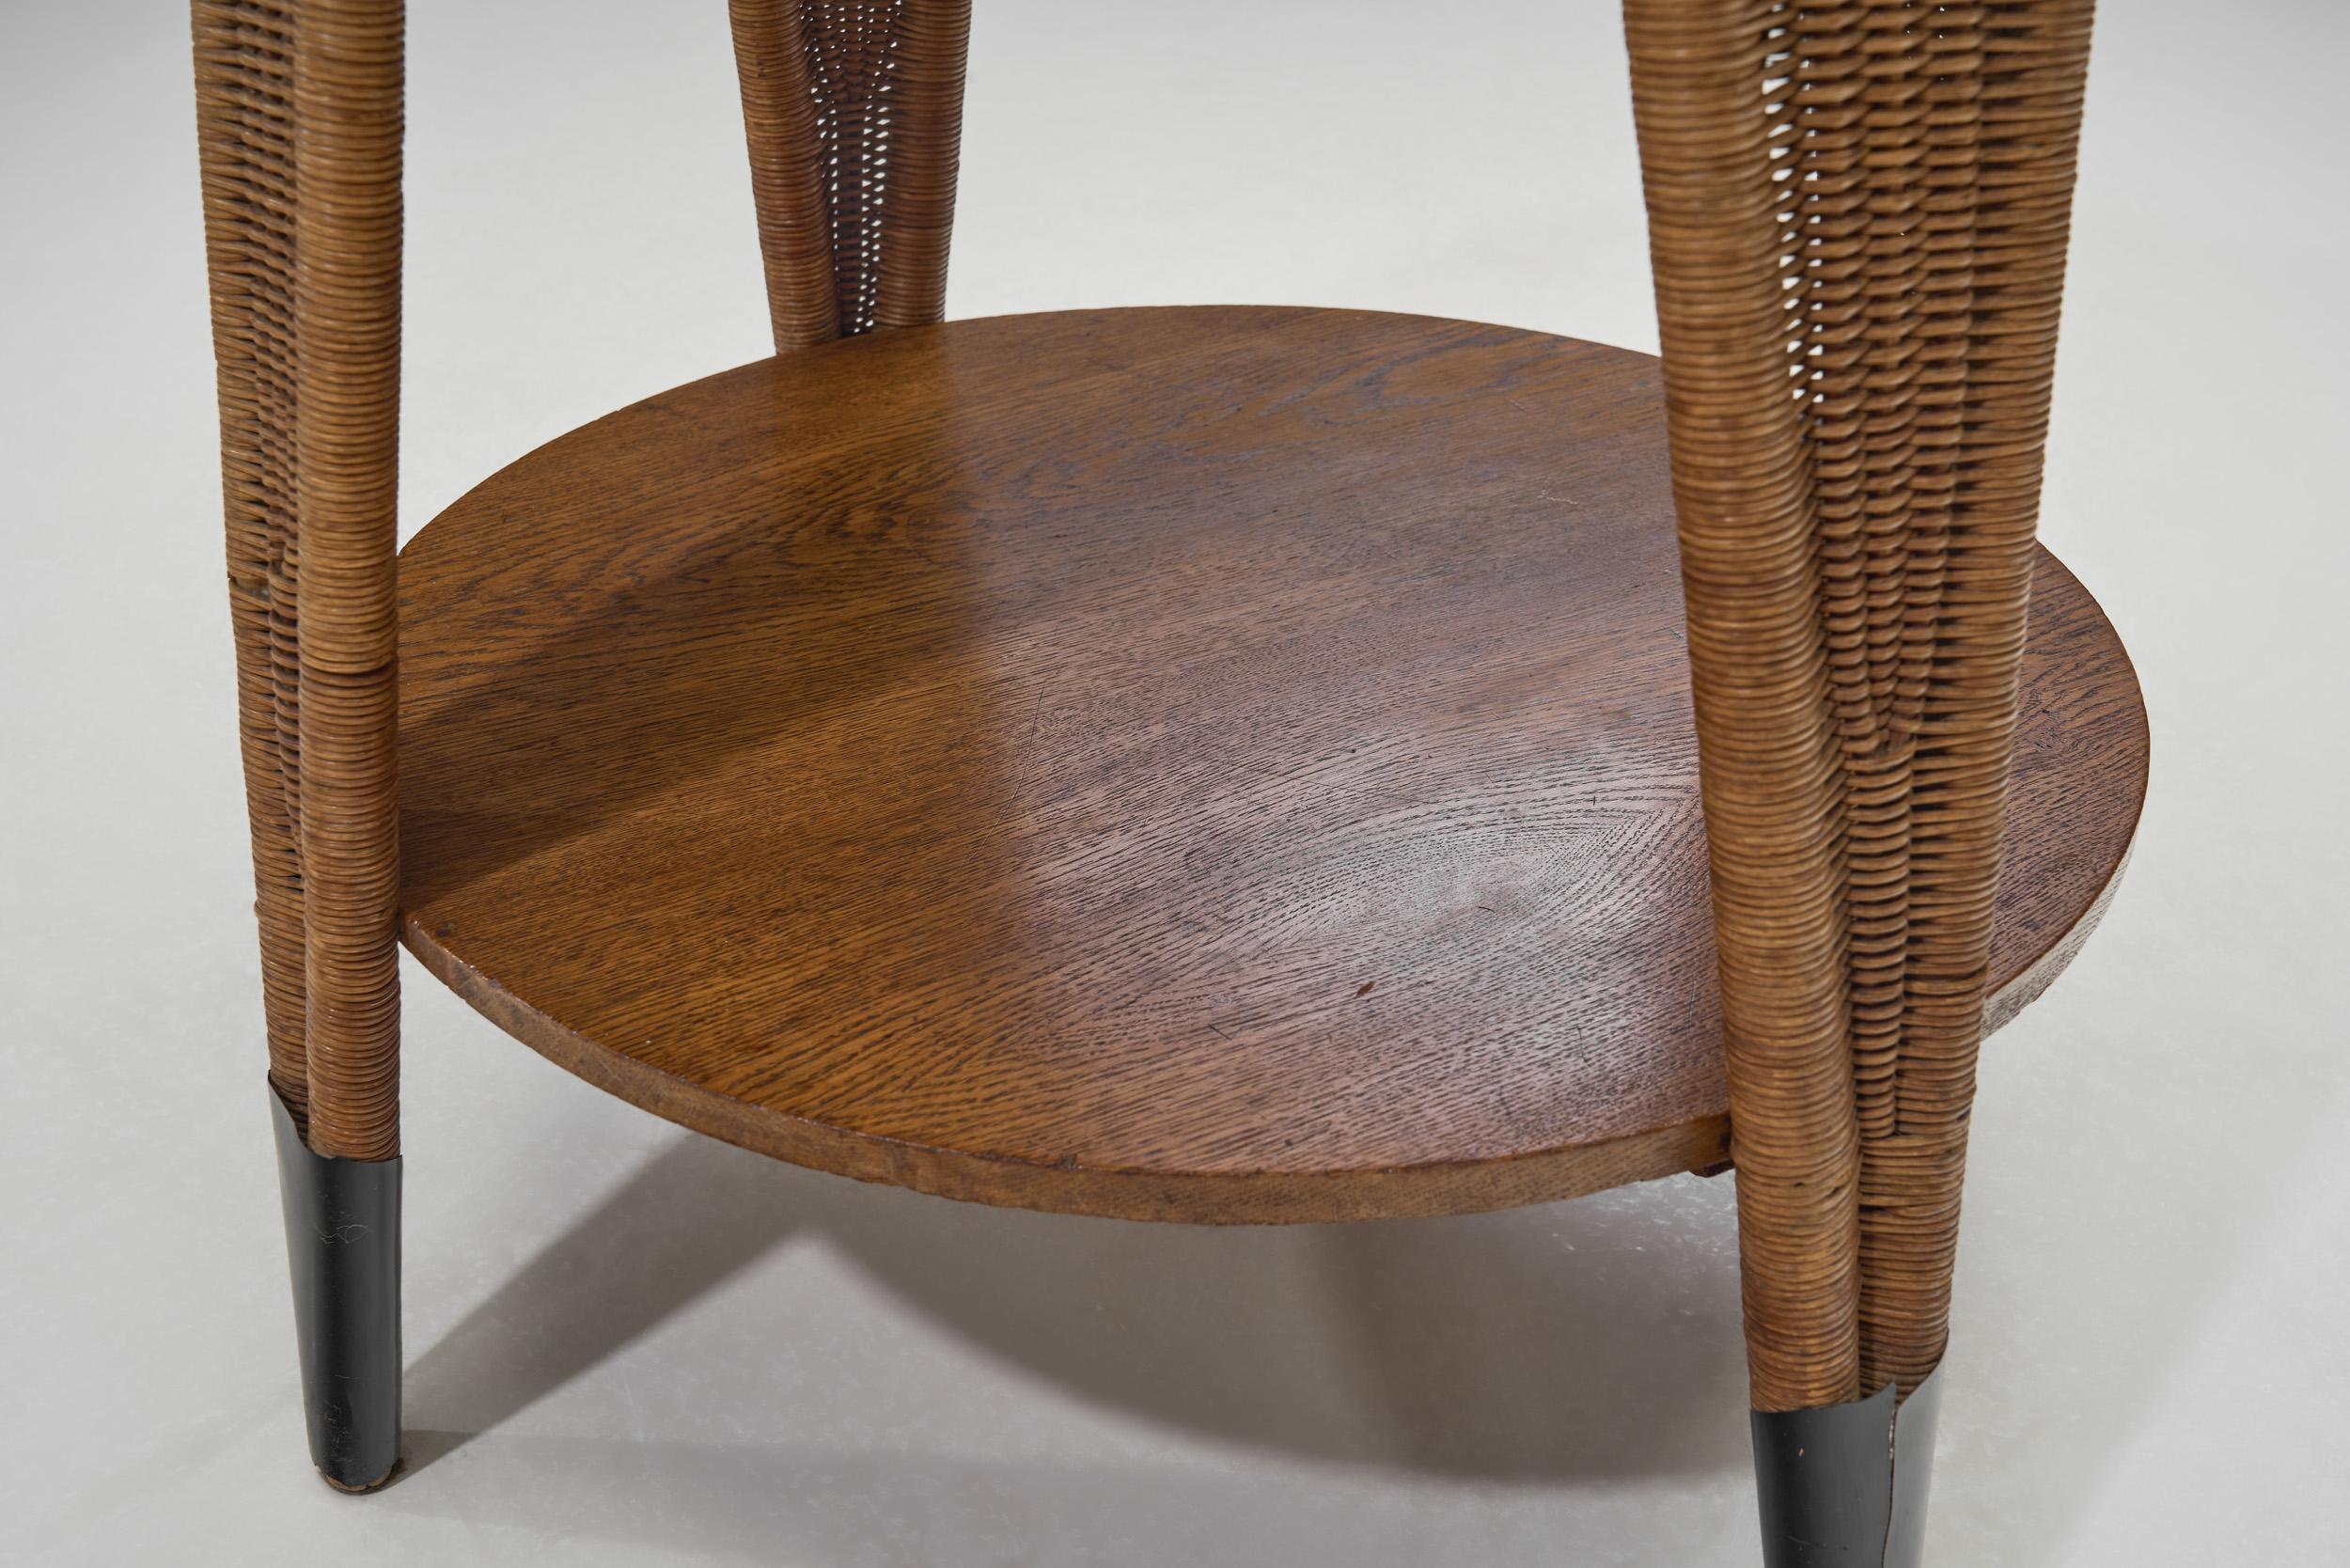 Circular Oak Coffee Table With Wicker Legs, Europe 20th Century 5